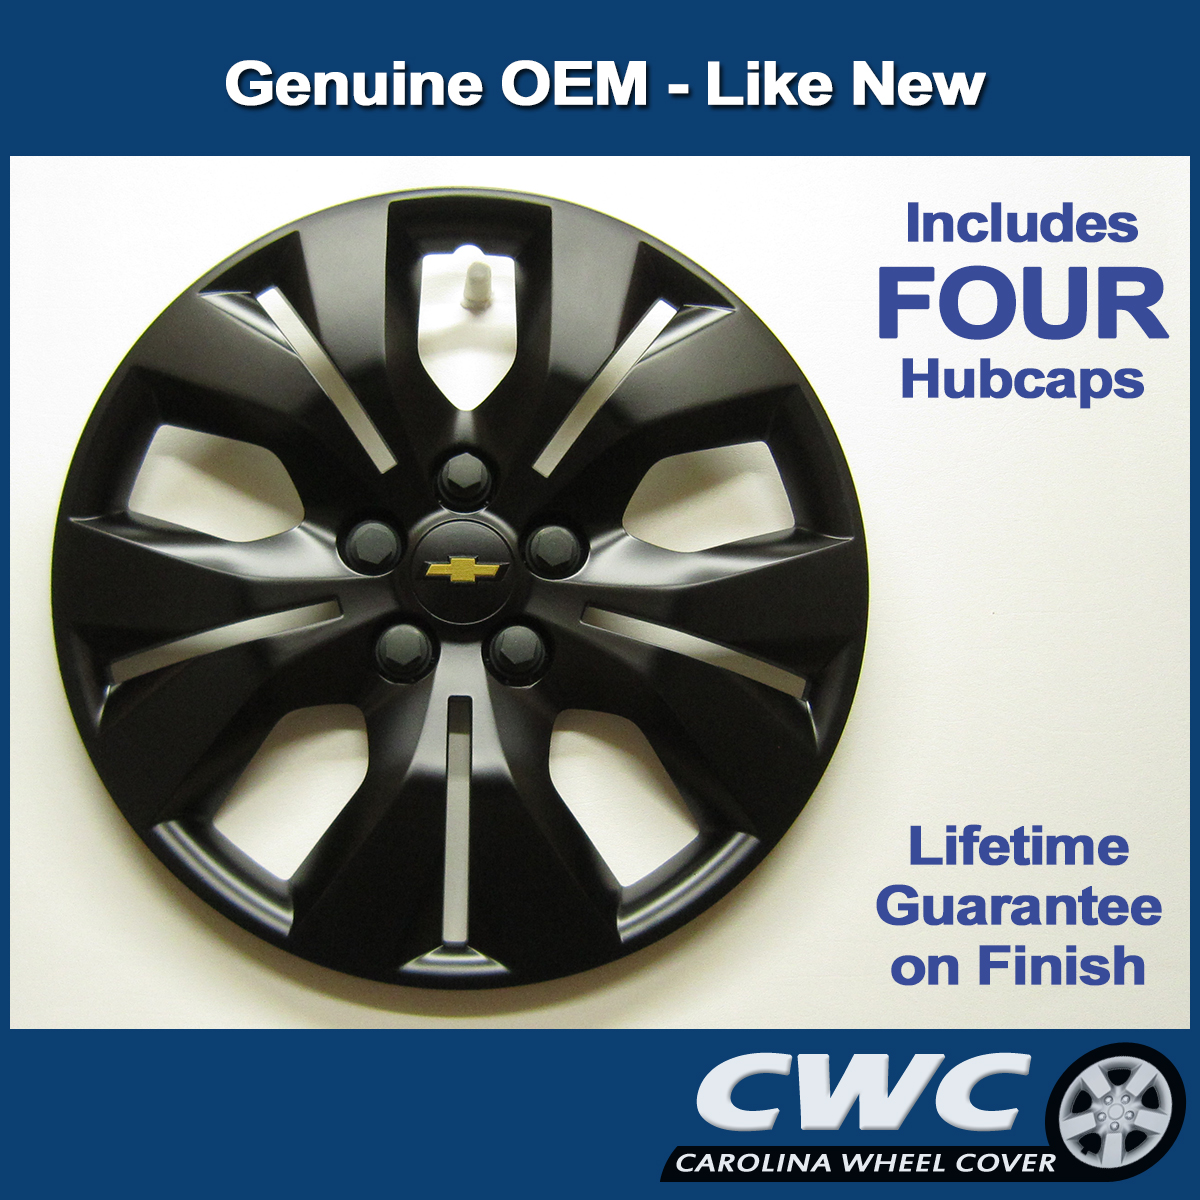 Hubcap Set fits Chevrolet Cruze 2011-2016, 16-inch Factory Wheel Covers, Custom Matte Black Paint (Set of 4) - image 4 of 5